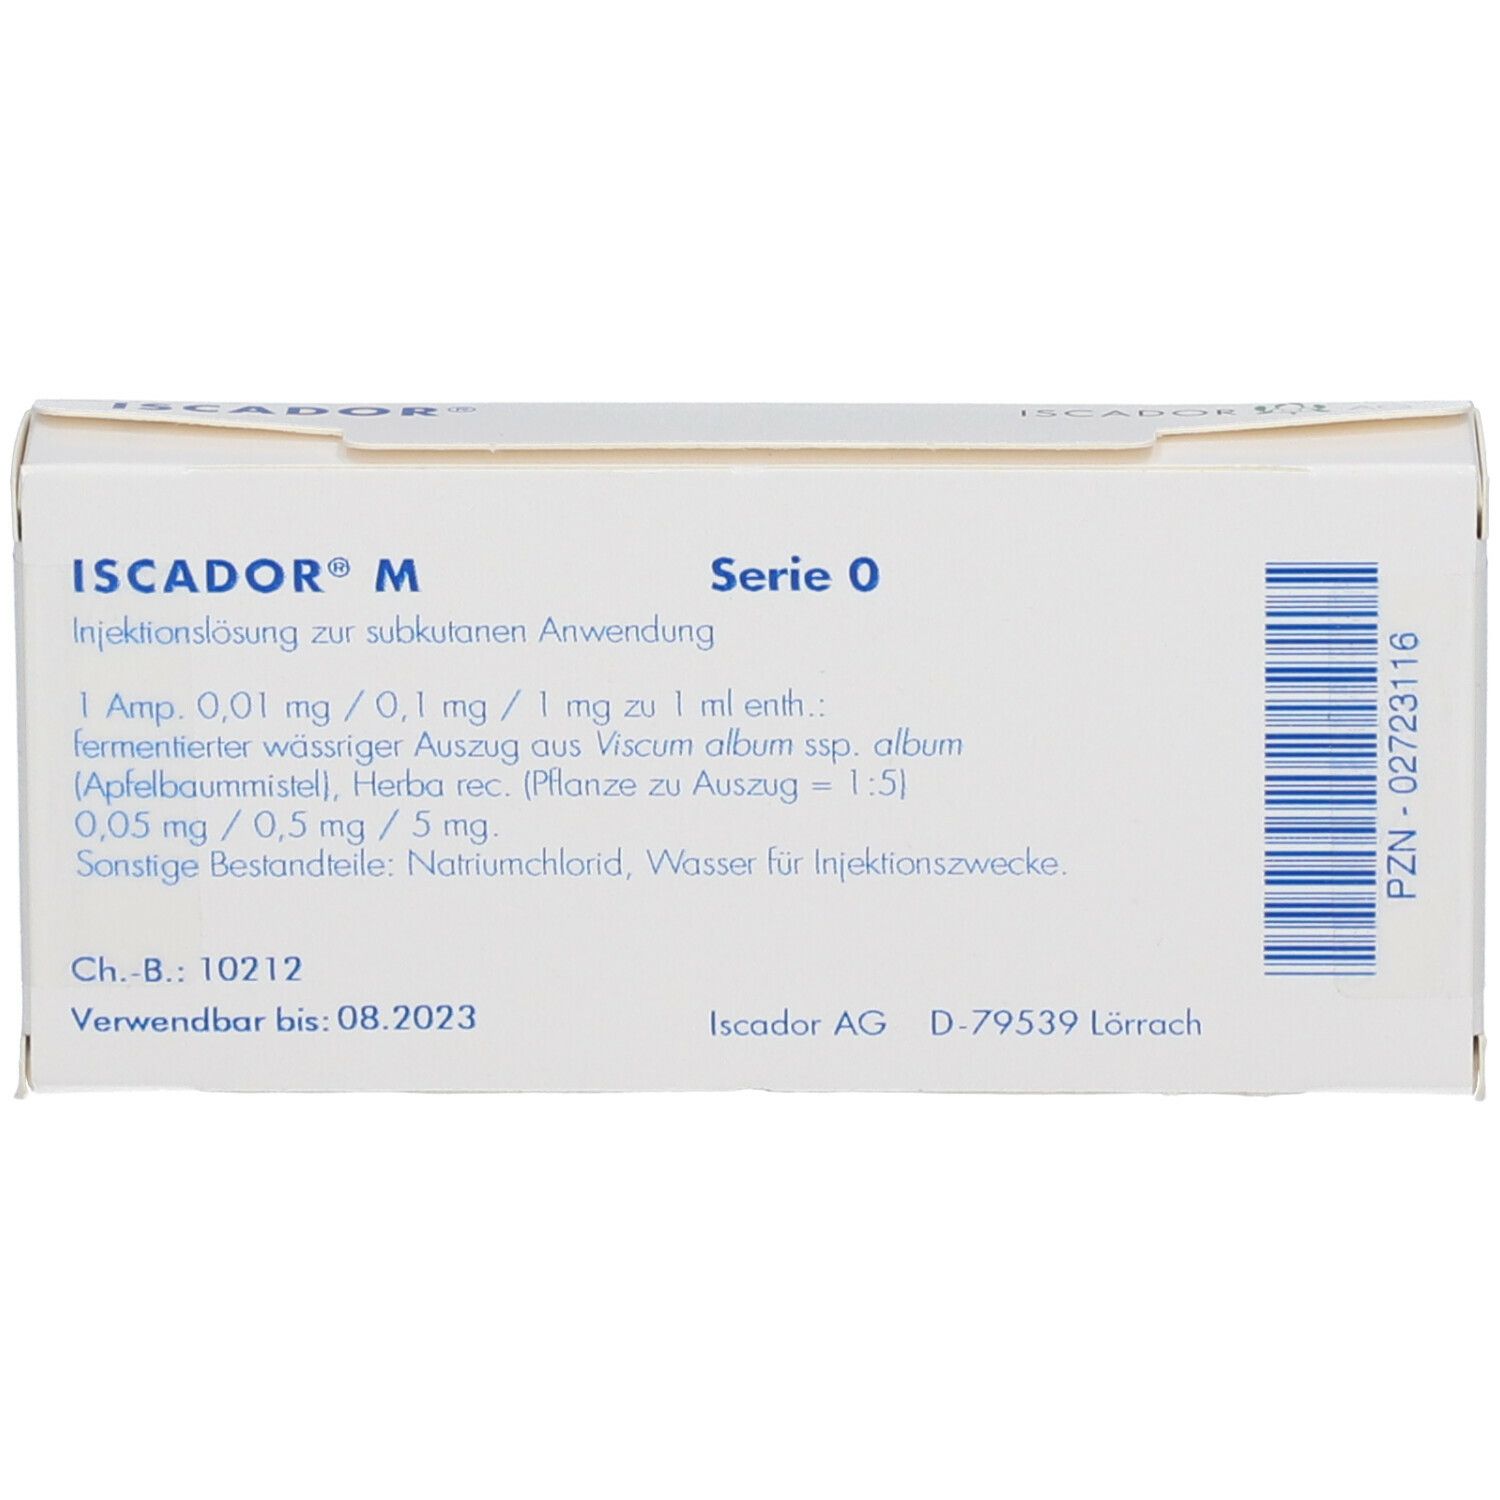 ISCADOR® M Serie 0